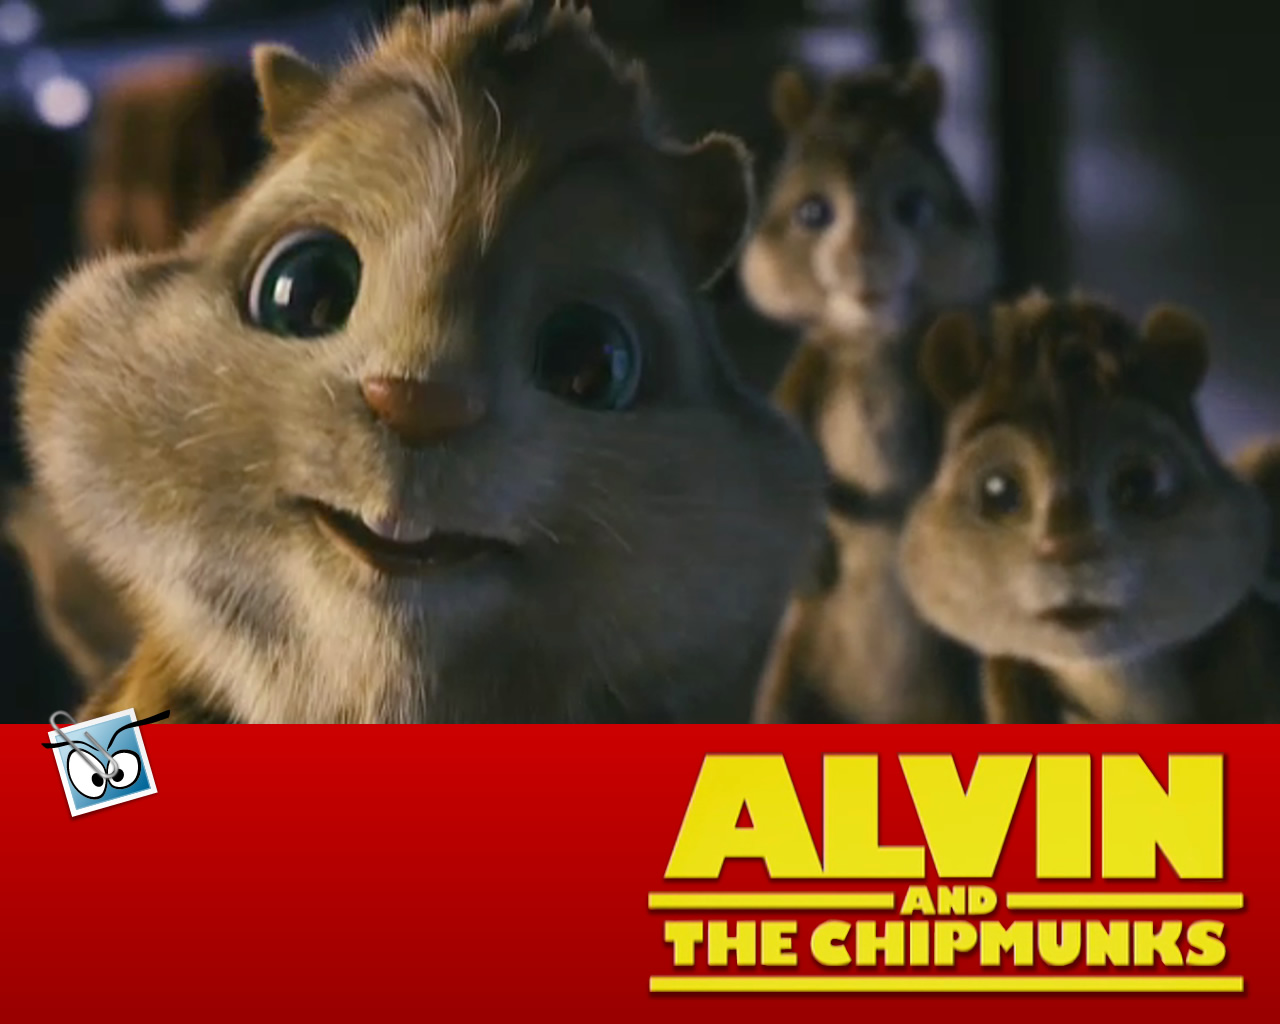 download wallpaper: Alvin en de Chipmunks wallpaper